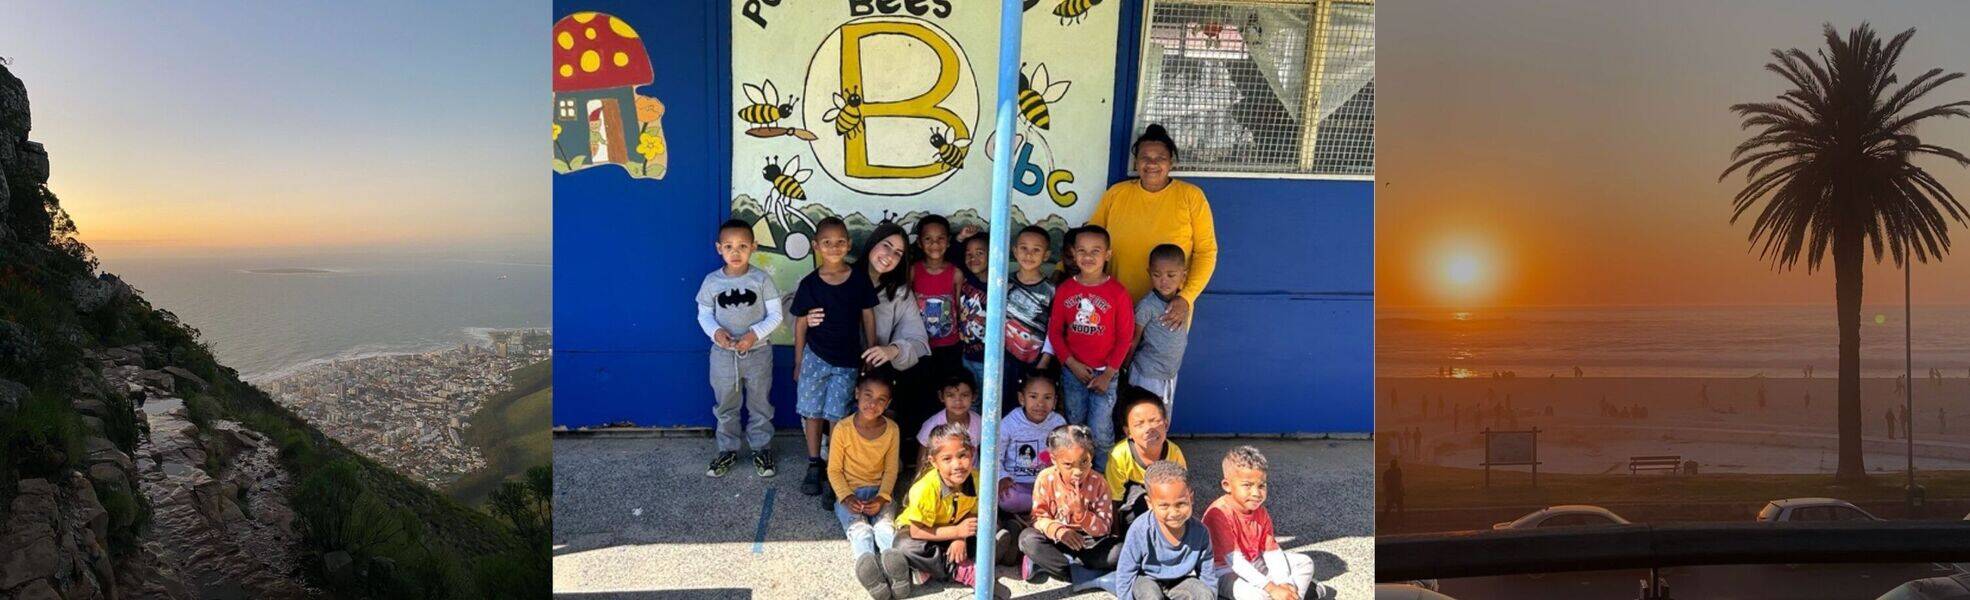 South Africa Children Center